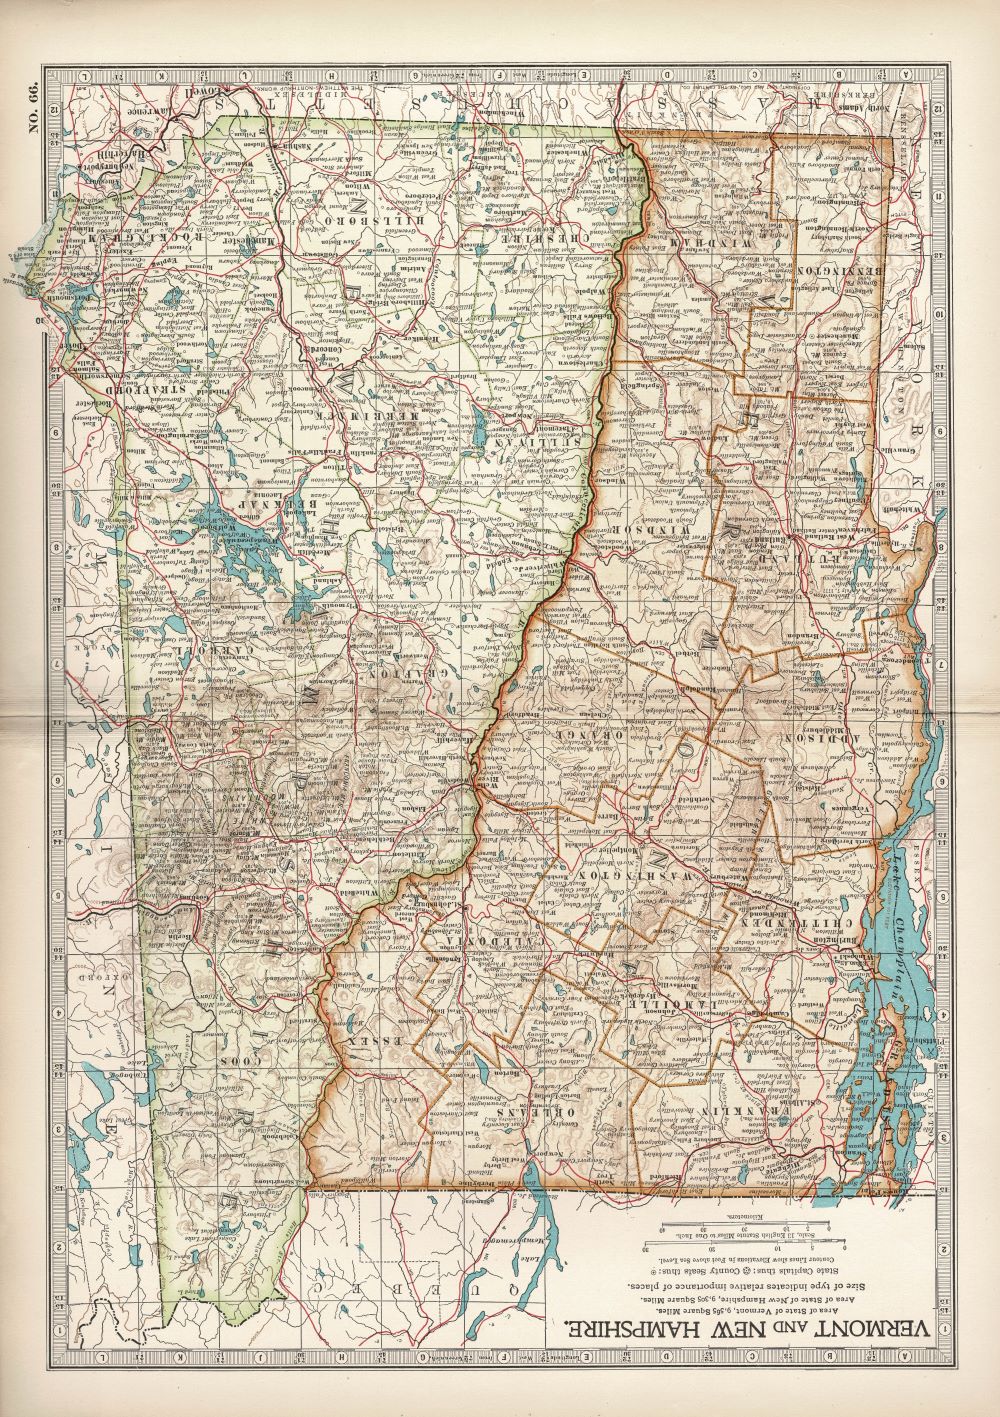 Vermont & New Hampshire, No.66, Encyclopaedia Britannica 1903